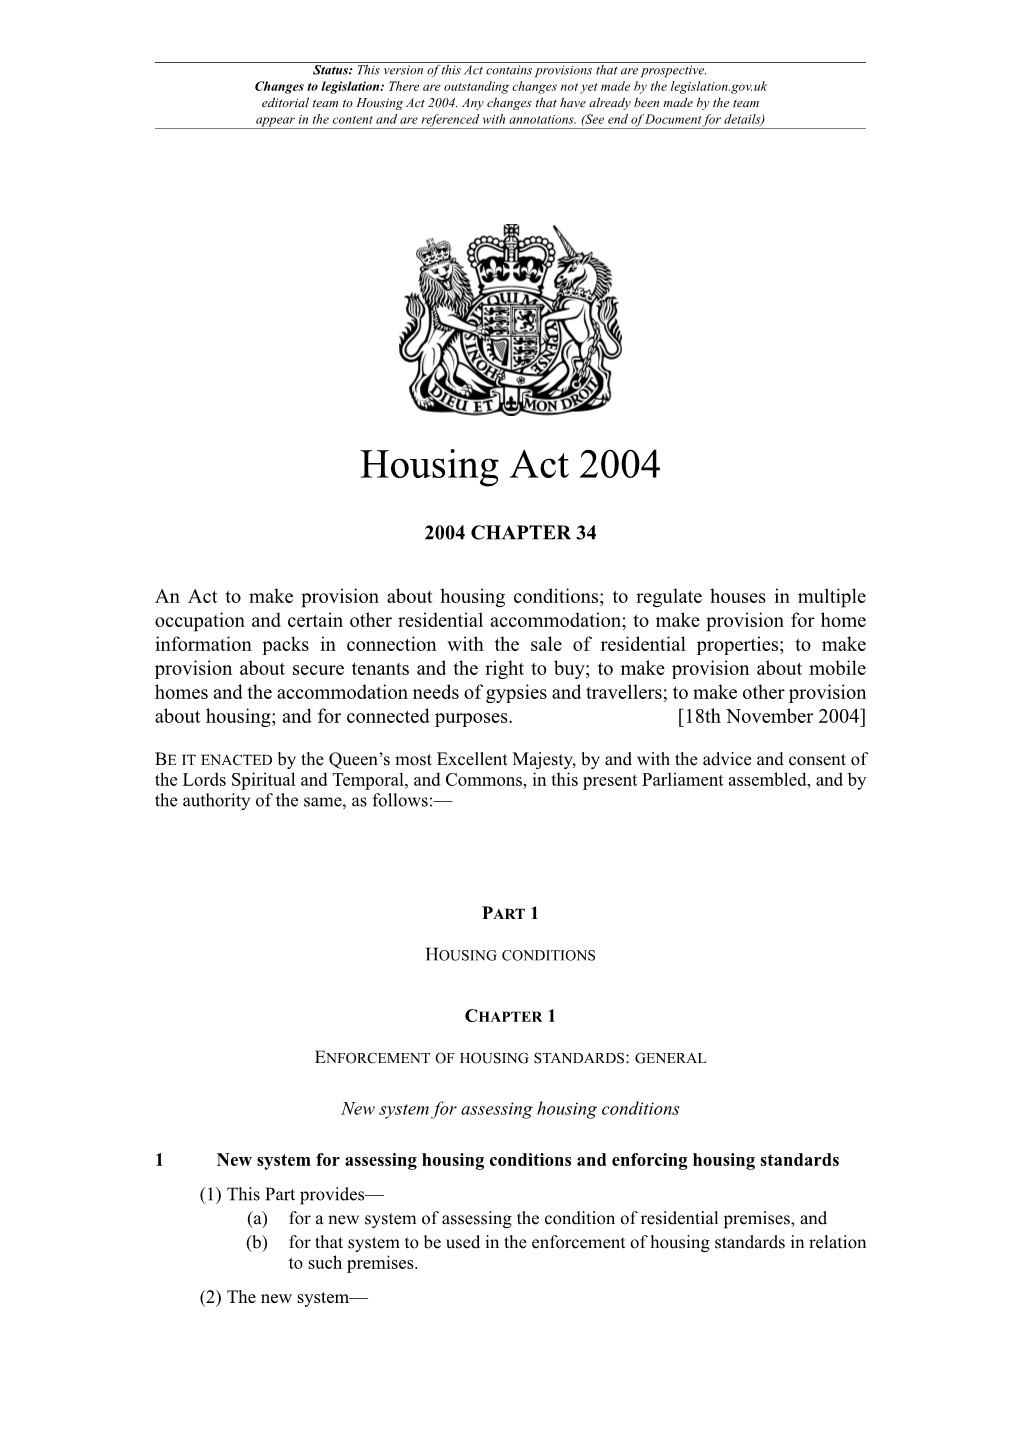 Housing Act 2004